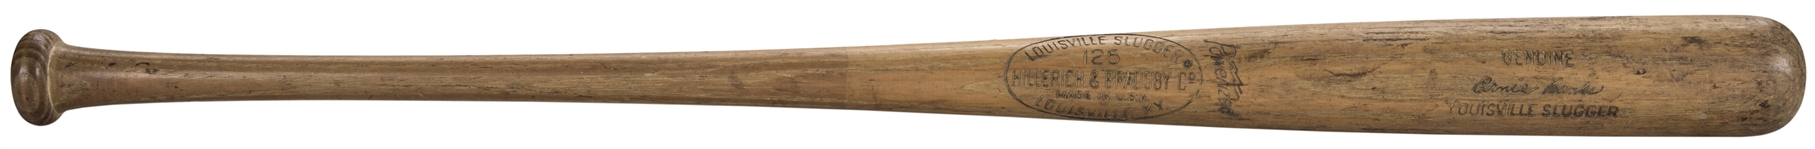 1965-1968 Ernie Banks Game Used Hillerich & Bradsby S2 Model Bat (PSA/DNA GU 10)